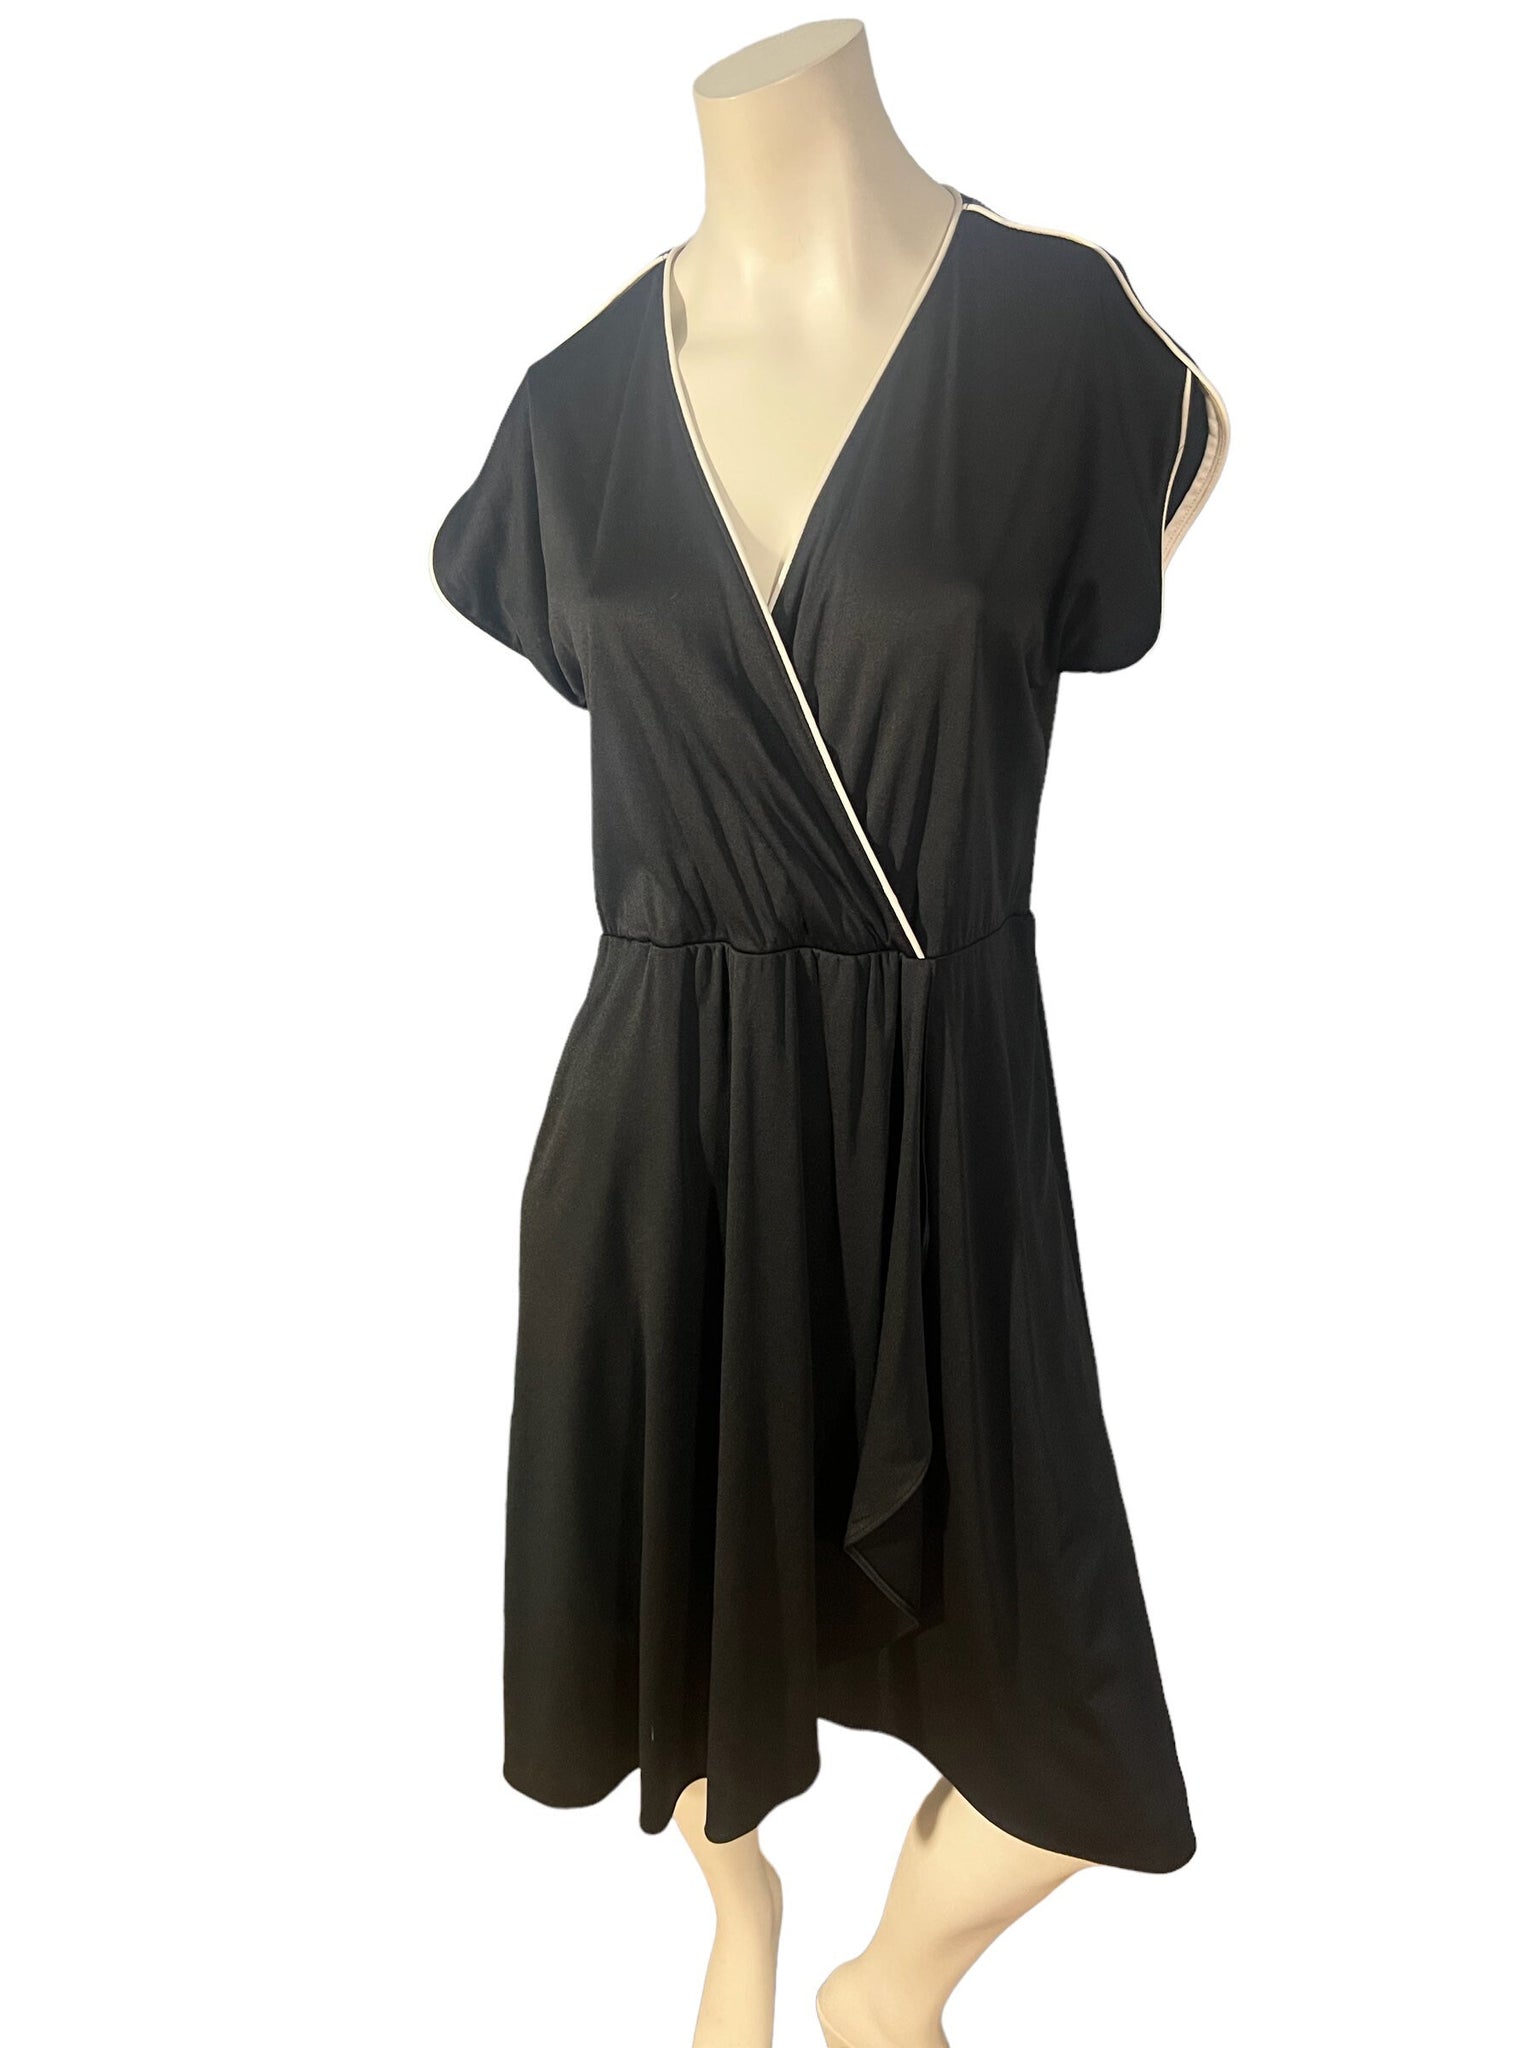 Vintage black 70's midi dress L